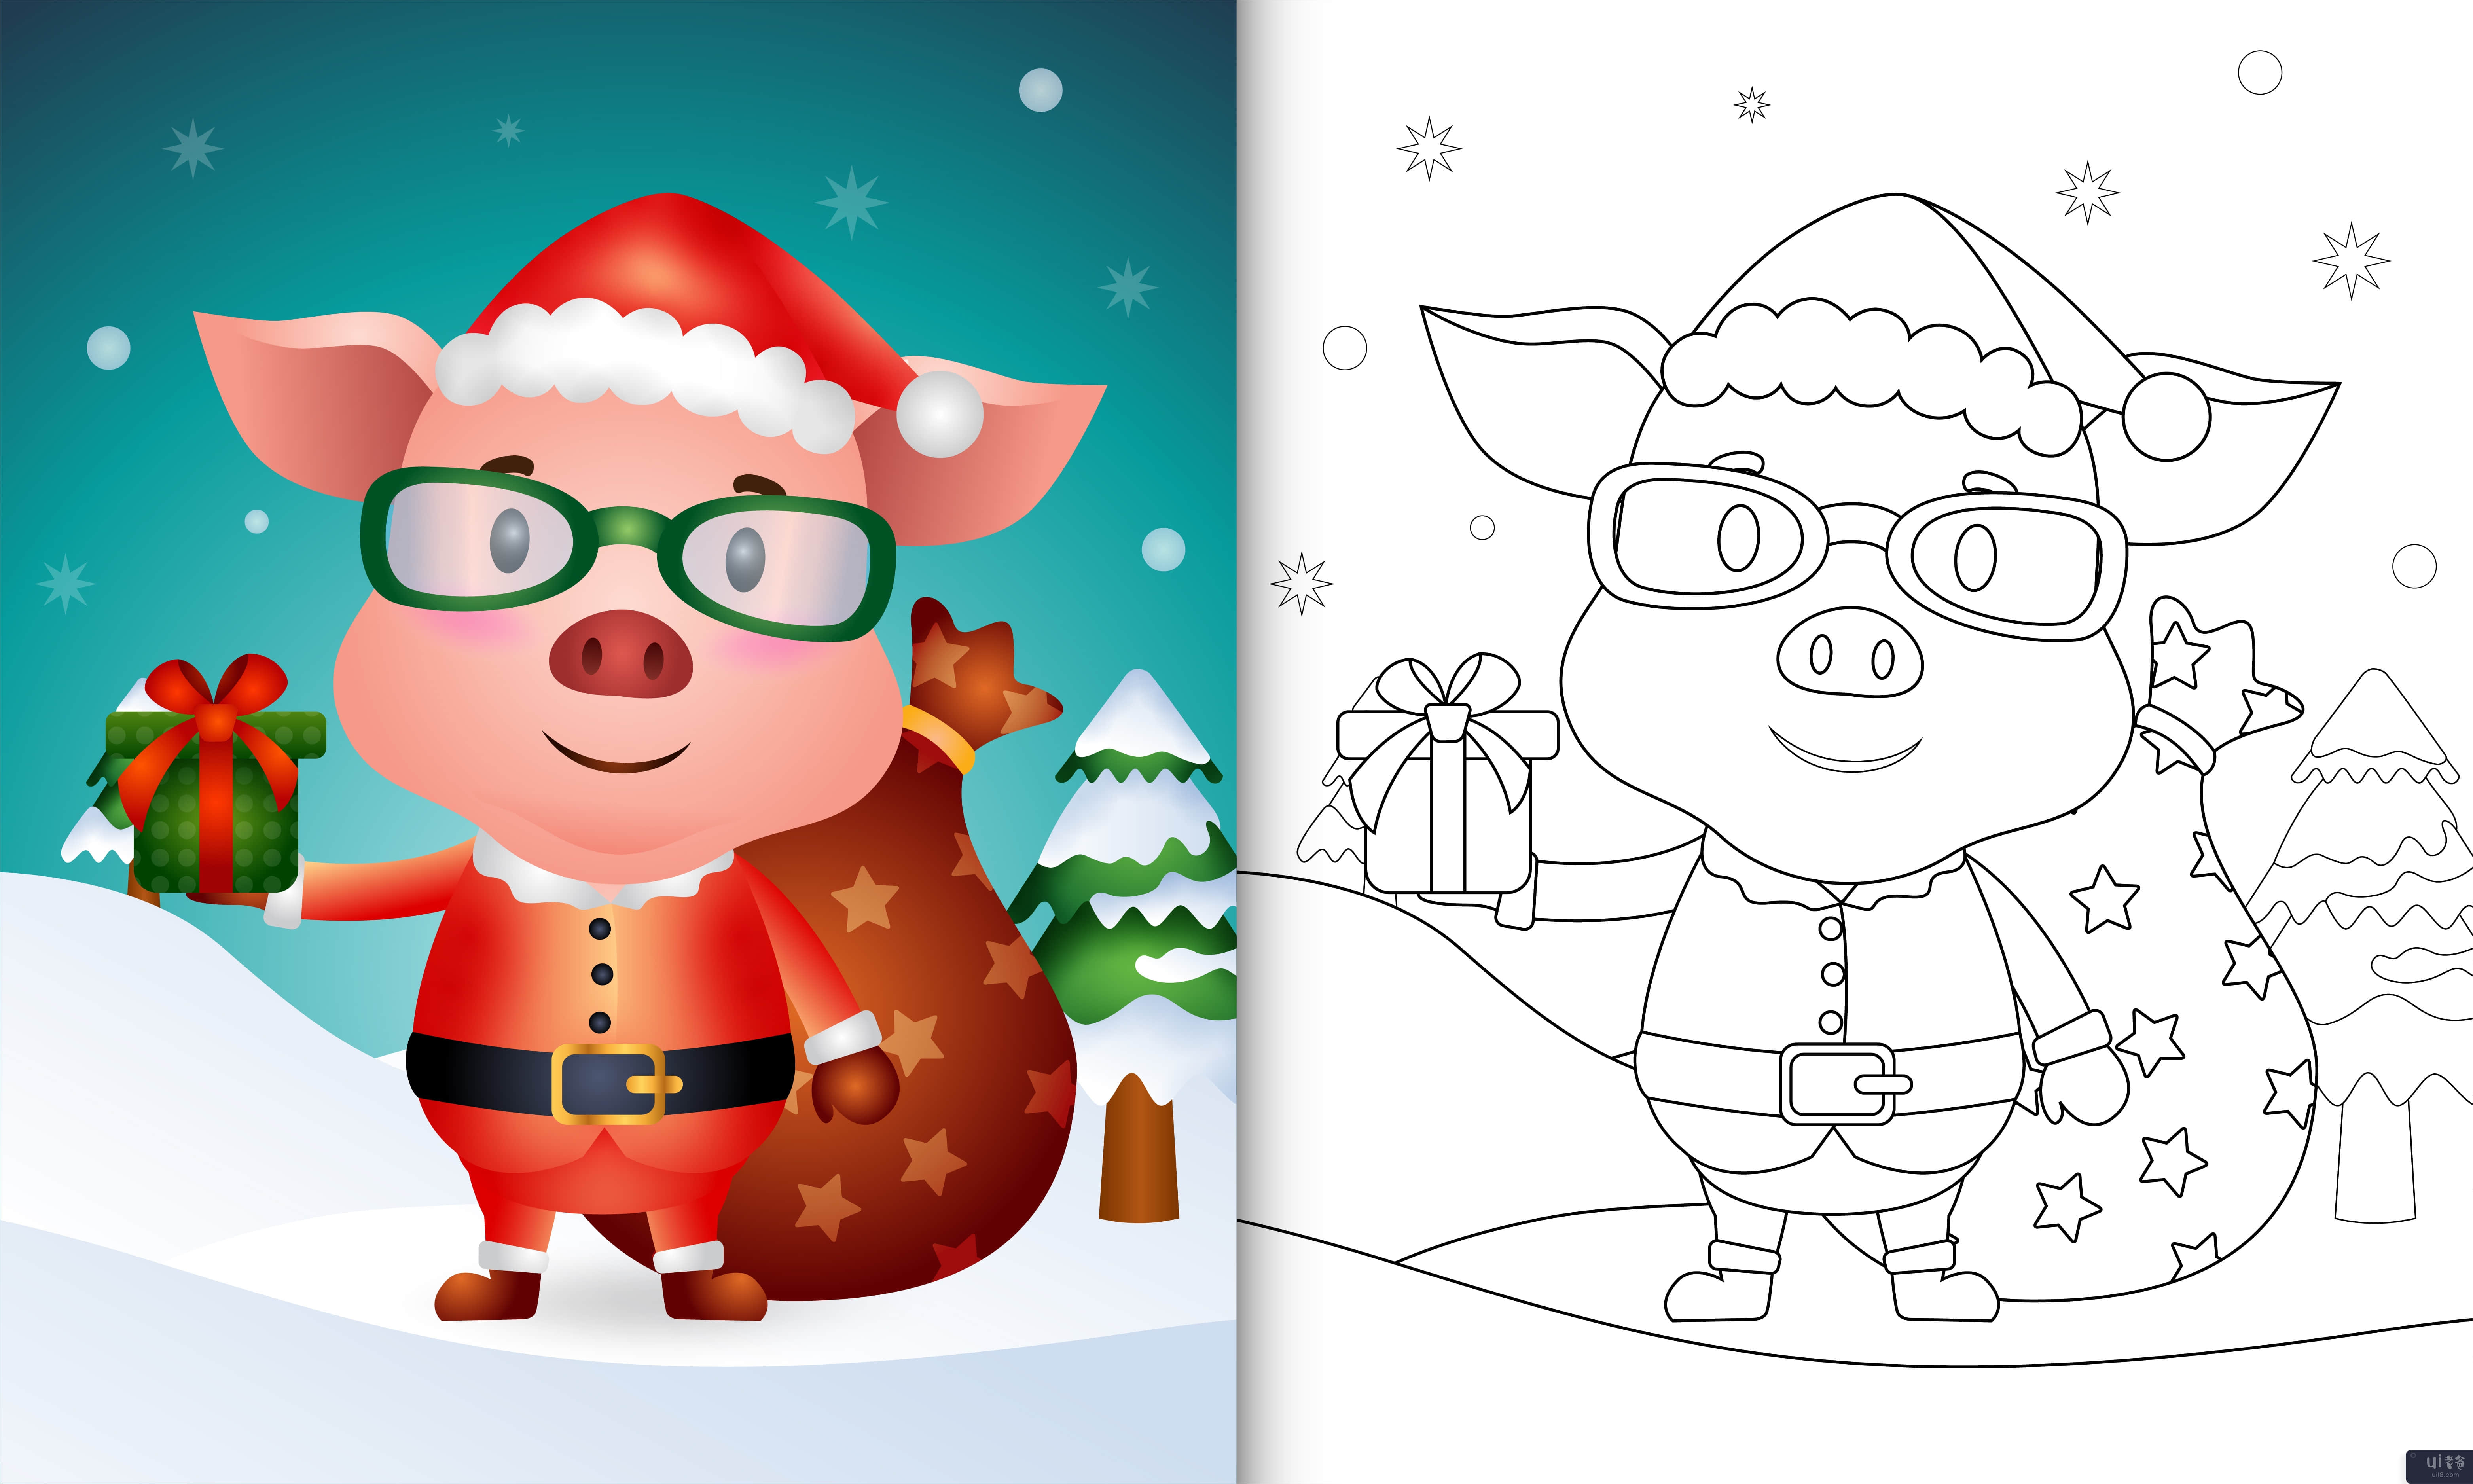 使用圣诞老人服装的可爱猪着色书(coloring book with a cute pig using santa clause costume)插图2